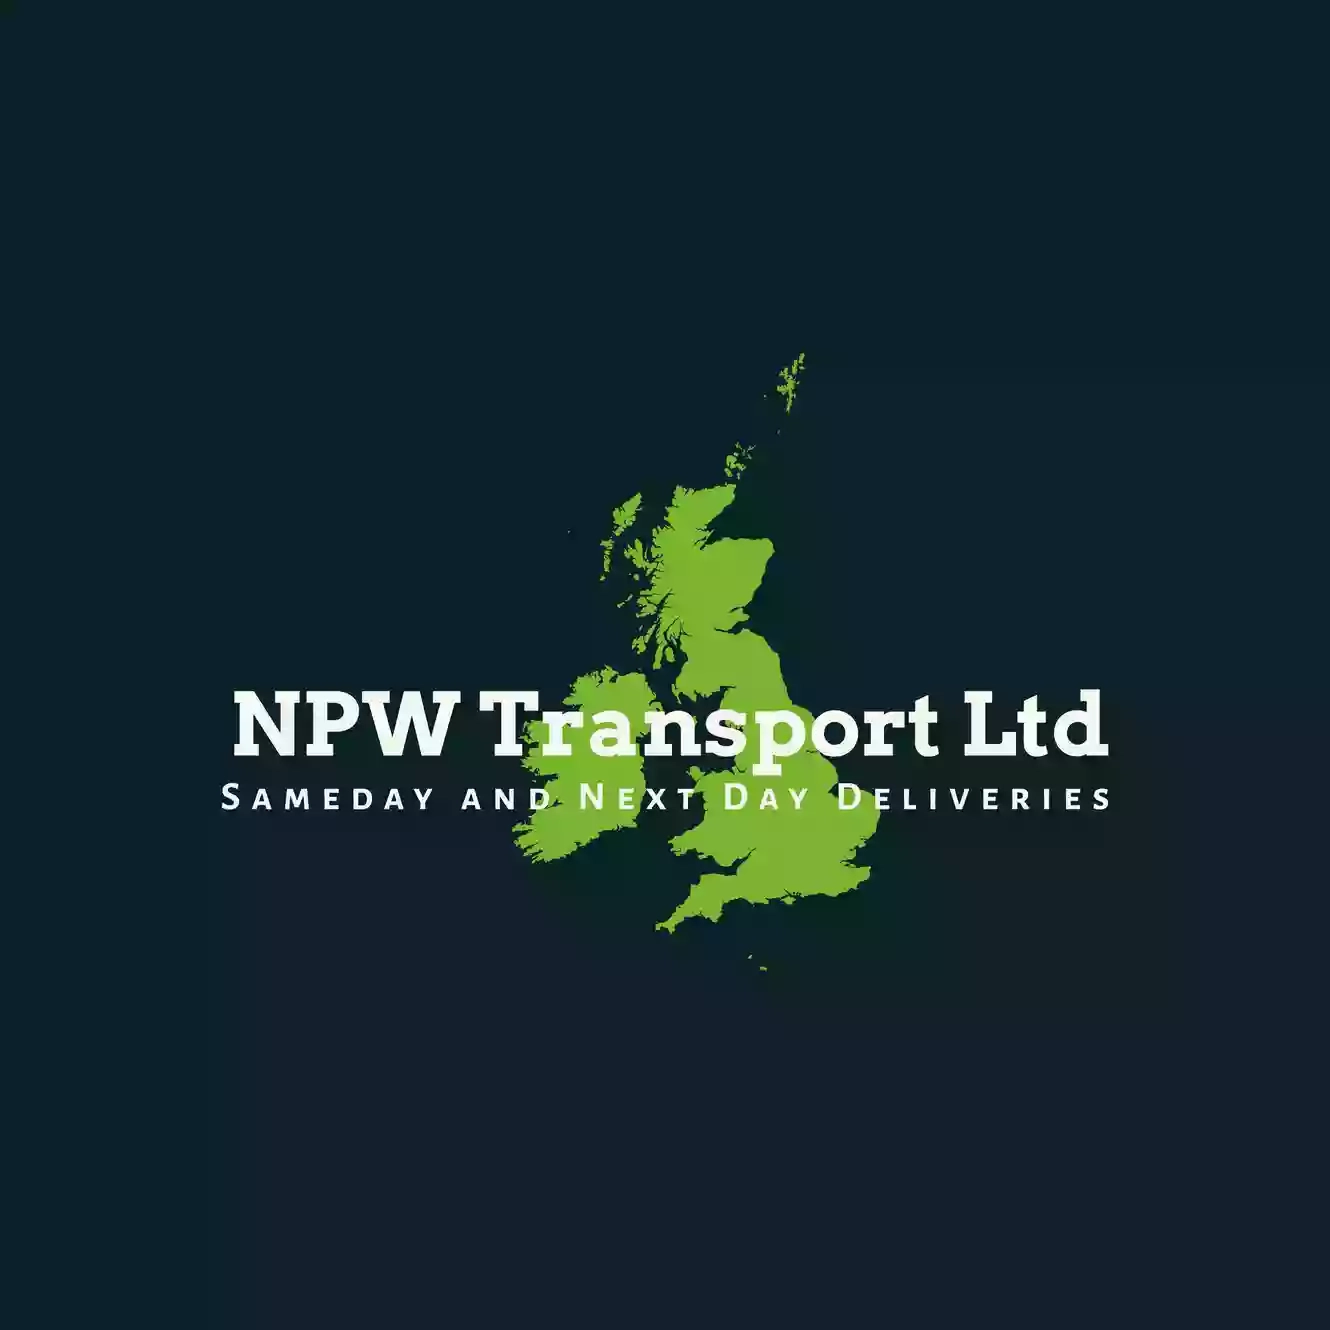 NPW Transport Ltd